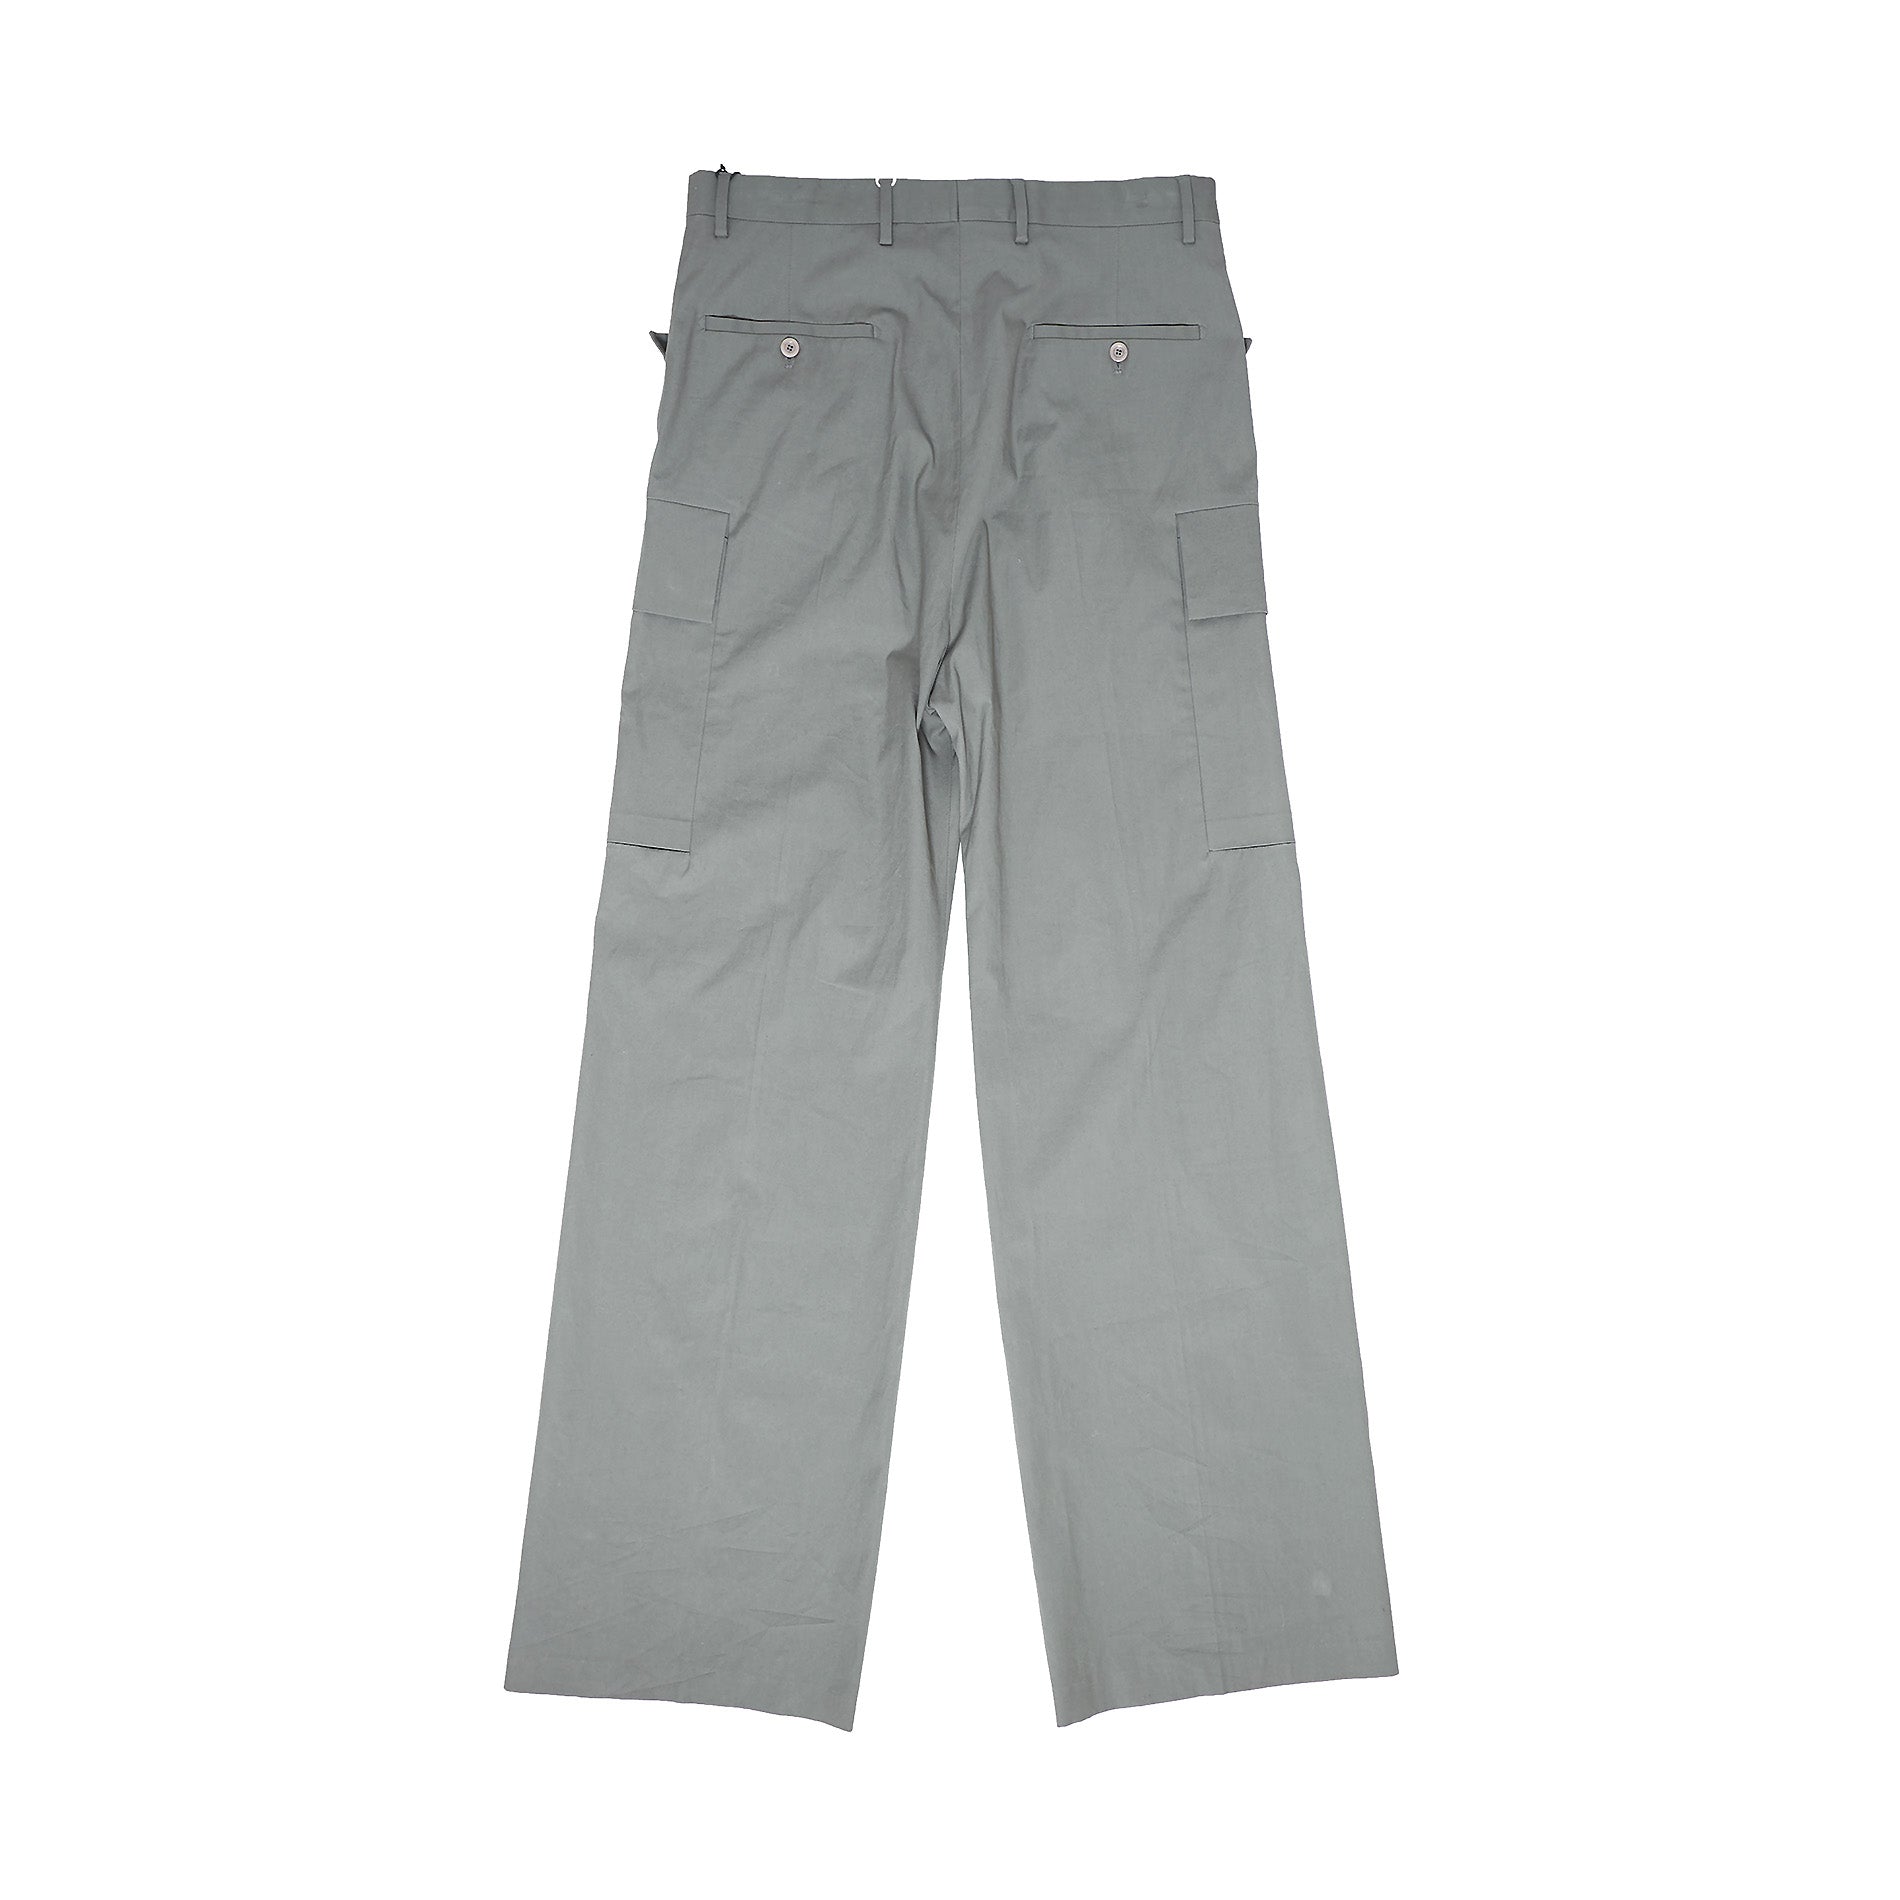 Rick Owens SS17 Walrus Tailored Cargo Pants